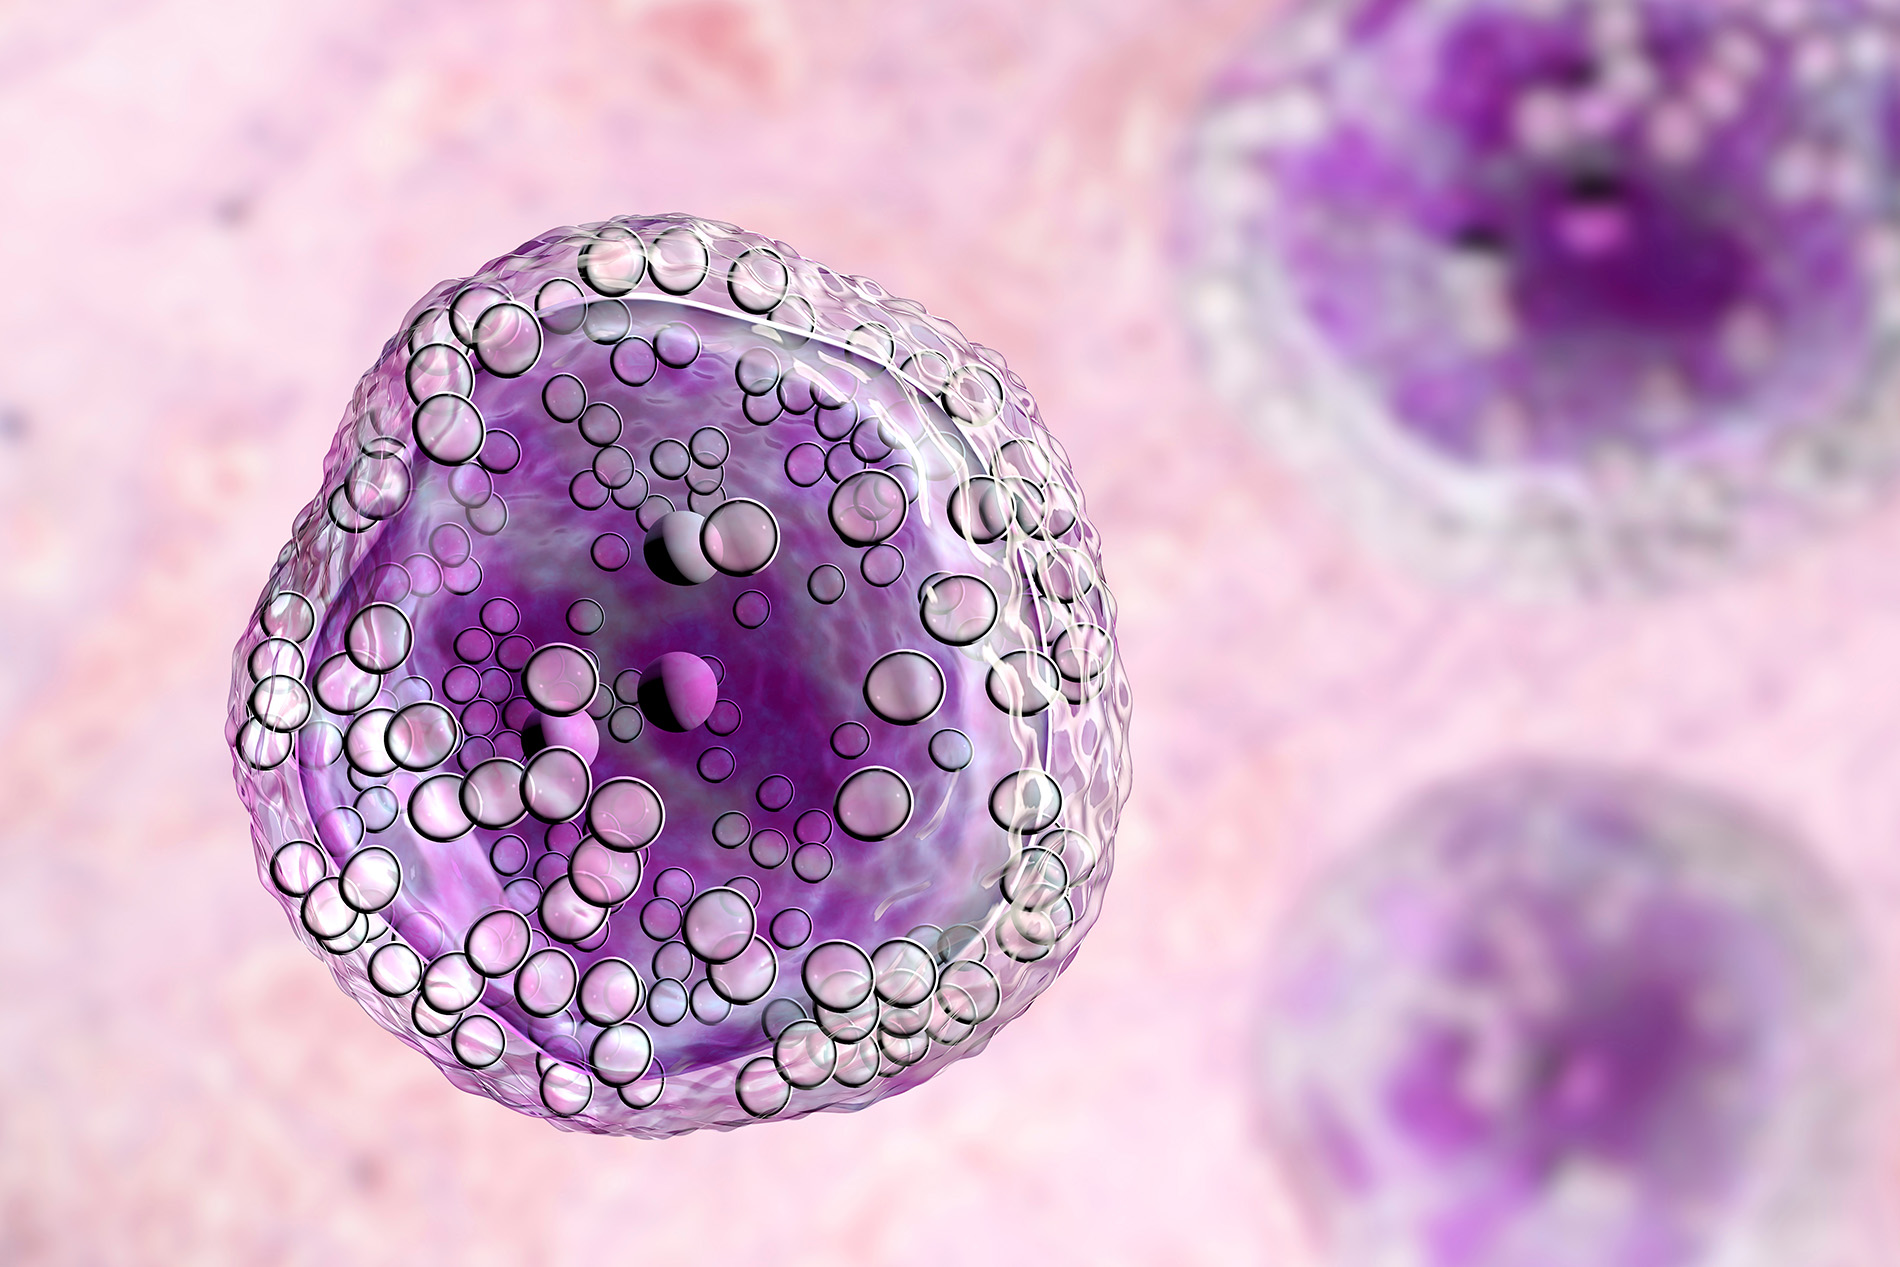 Microscopic image of lymphoma cells